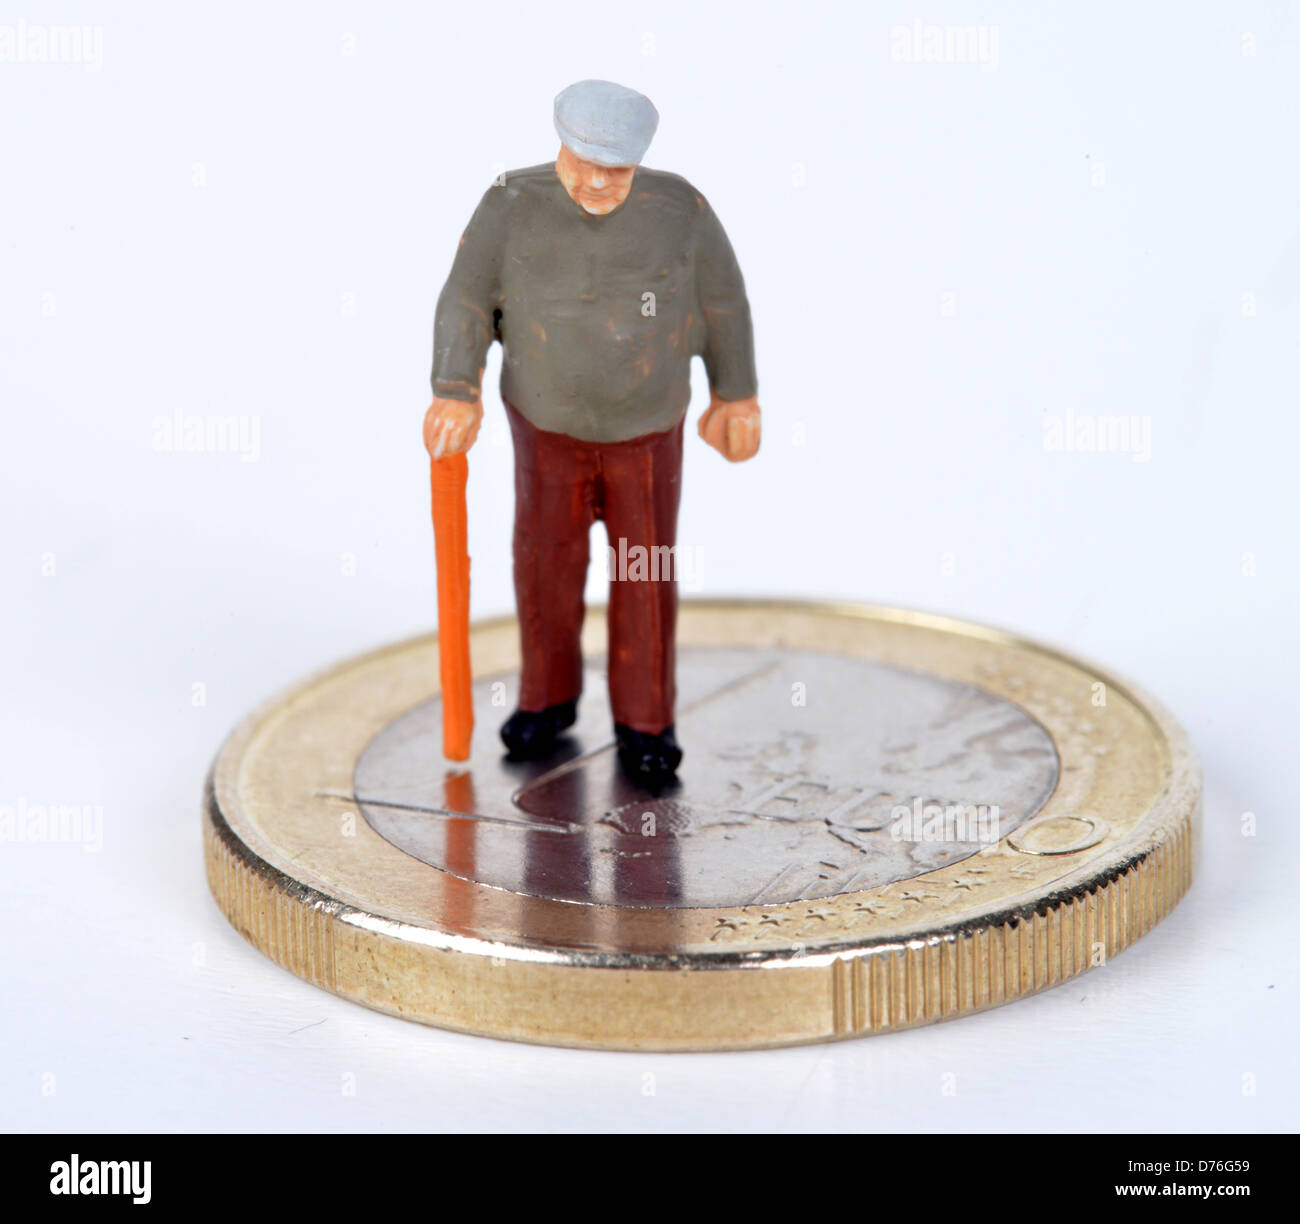 Symboldbild pensioner Miniaturfigur money Stock Photo